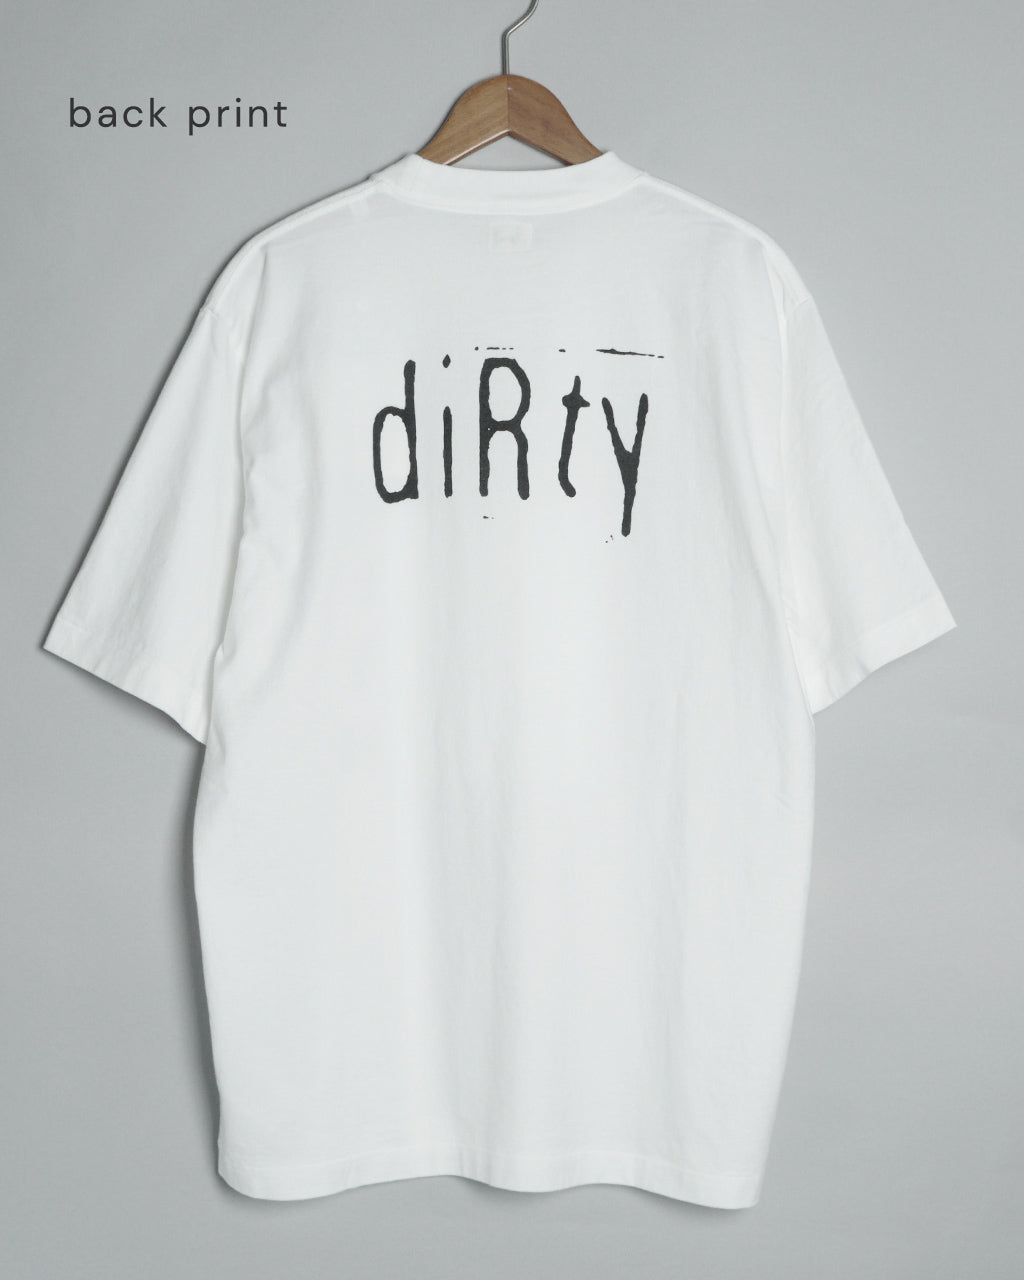 blurhms ROOTSTOCK ブラームス ルーツストックプリント Tシャツ diRty Print Tee STANDARD【送料無料】正規取扱店【お一人様、1点ずつまで】